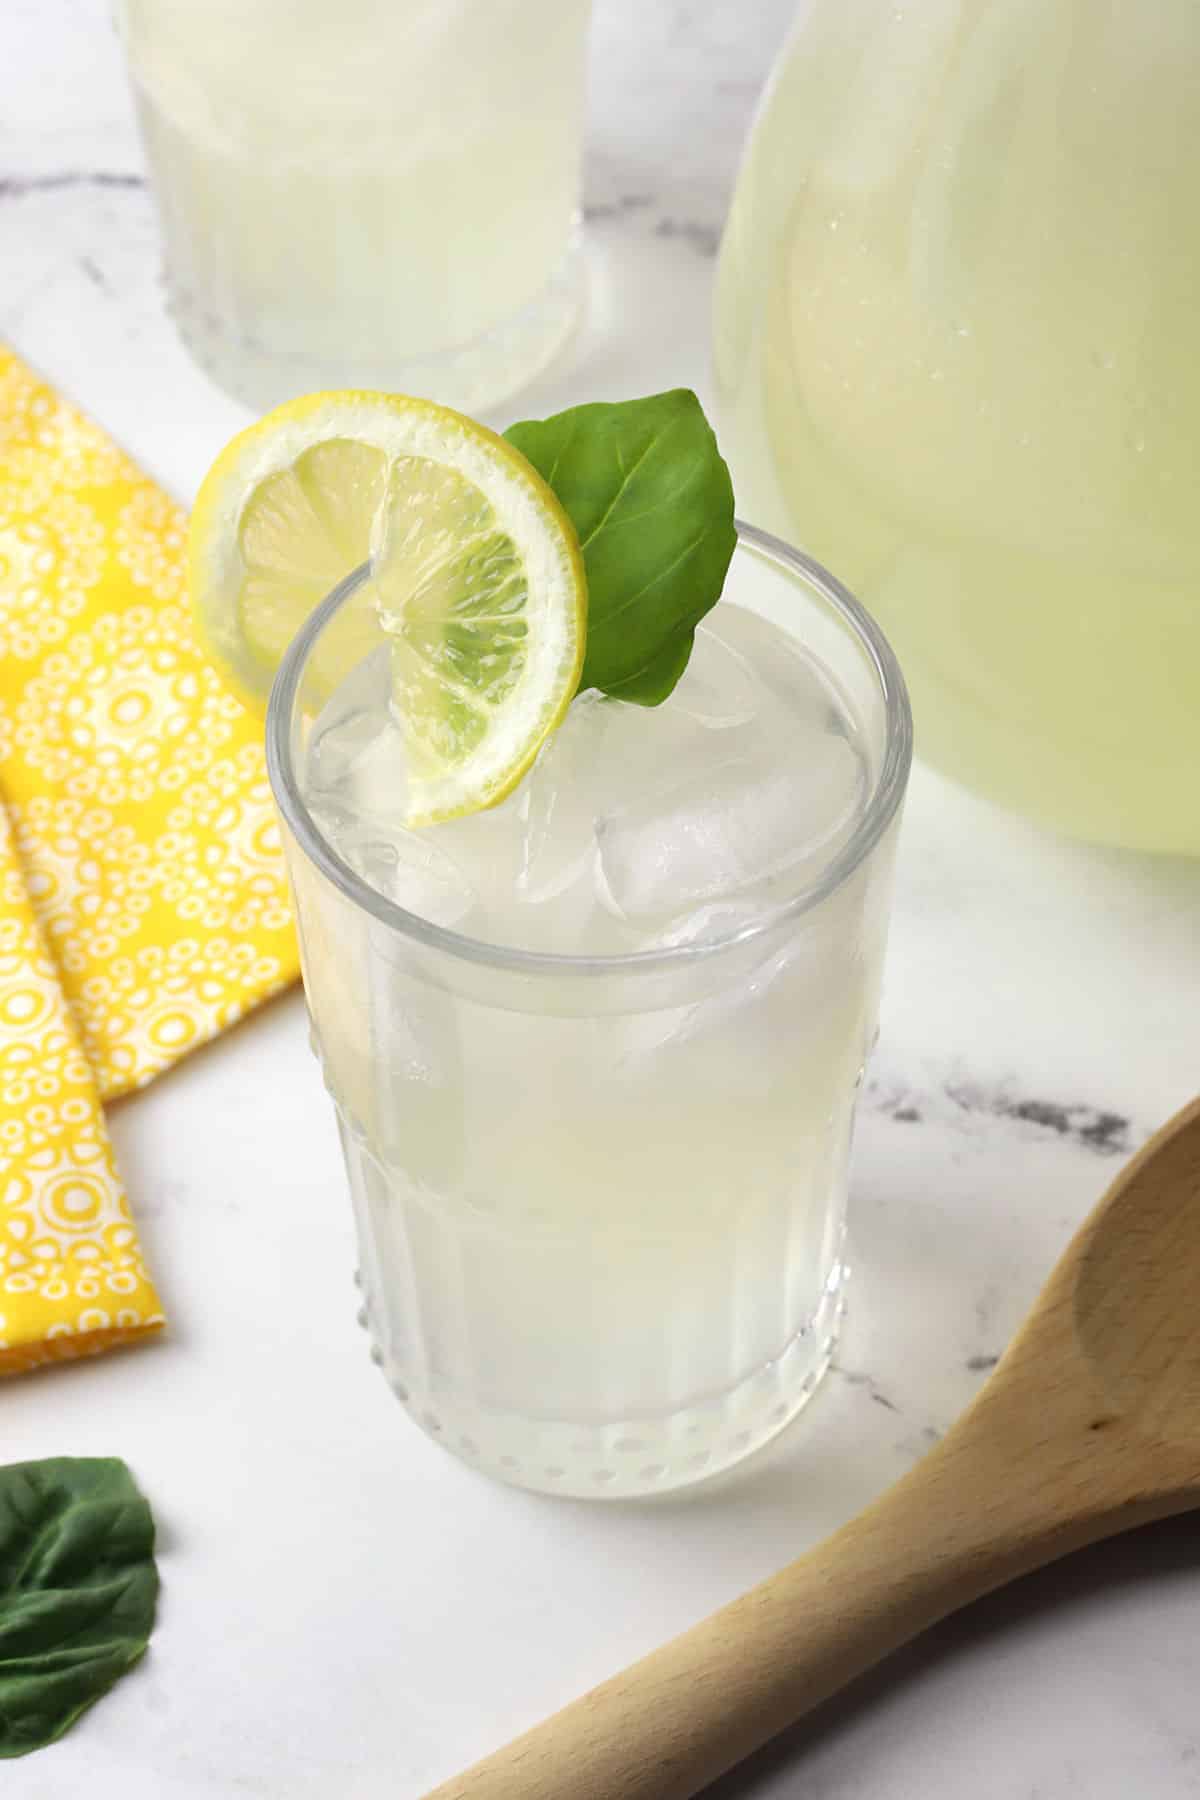 Close up of a glass of basil lemonade, garnished with a basil leaf and a lemon slice.